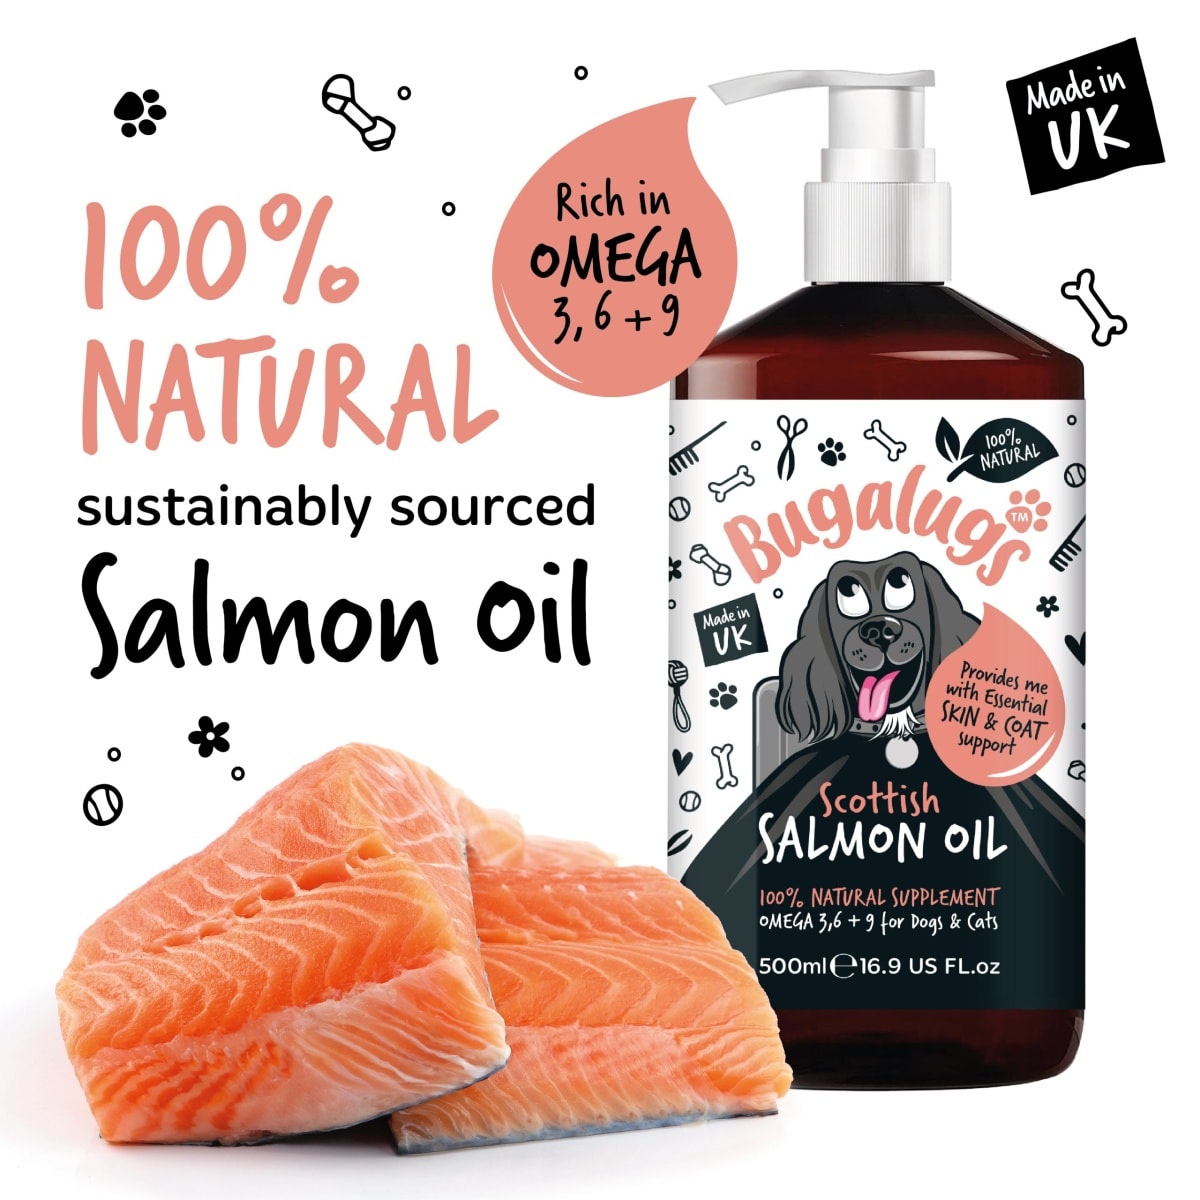 Bugalugs Scottish Salmon Oil 500ml Main Image